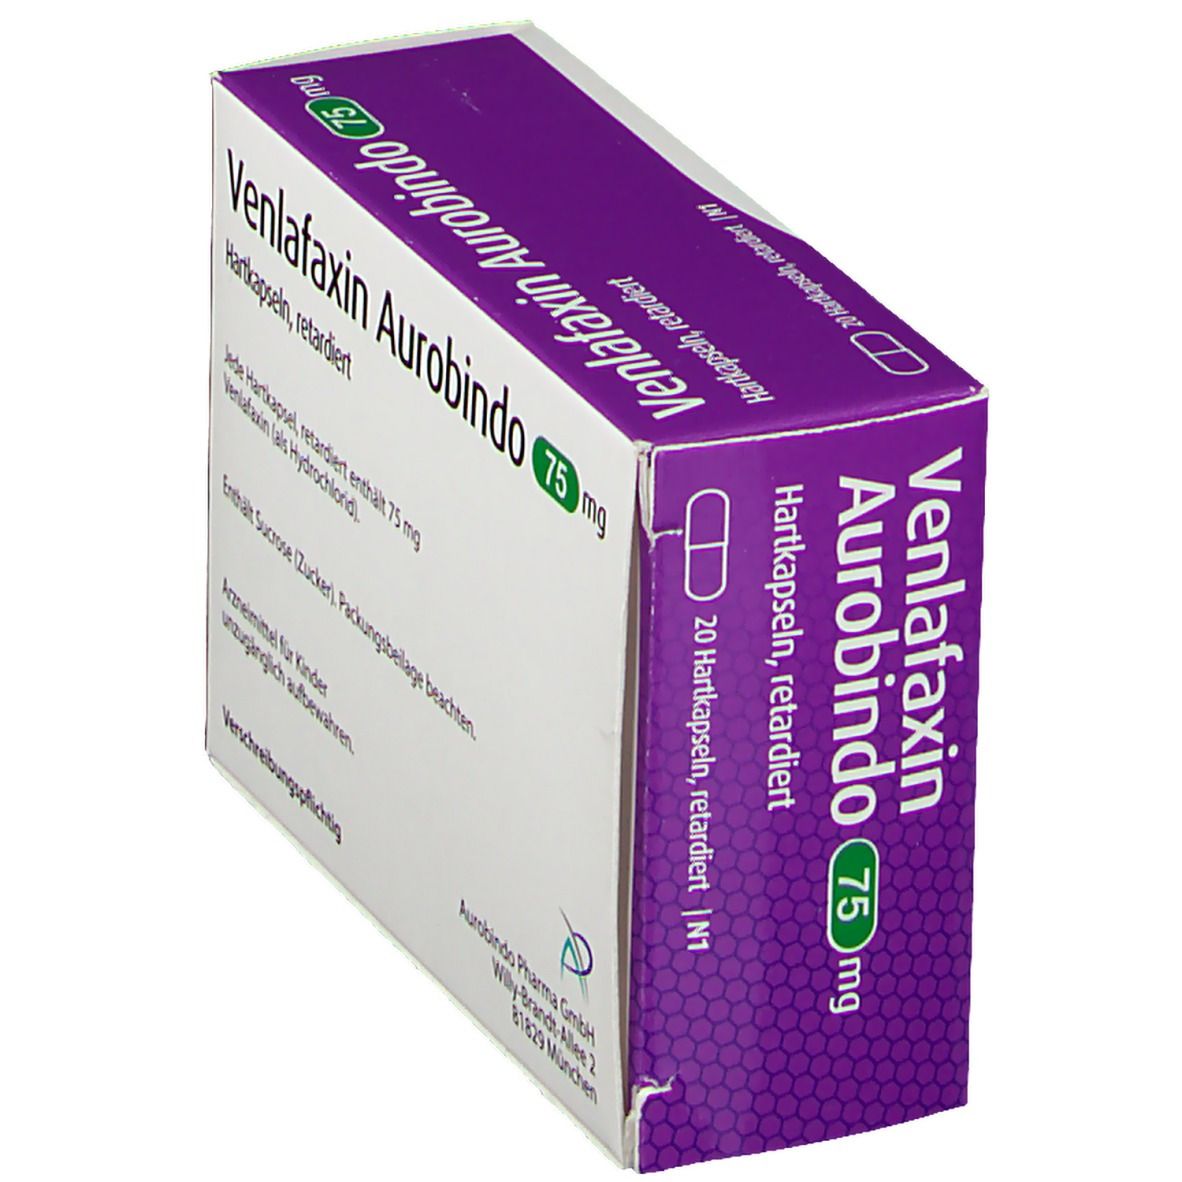 Venlafaxin Aurobindo 75 mg